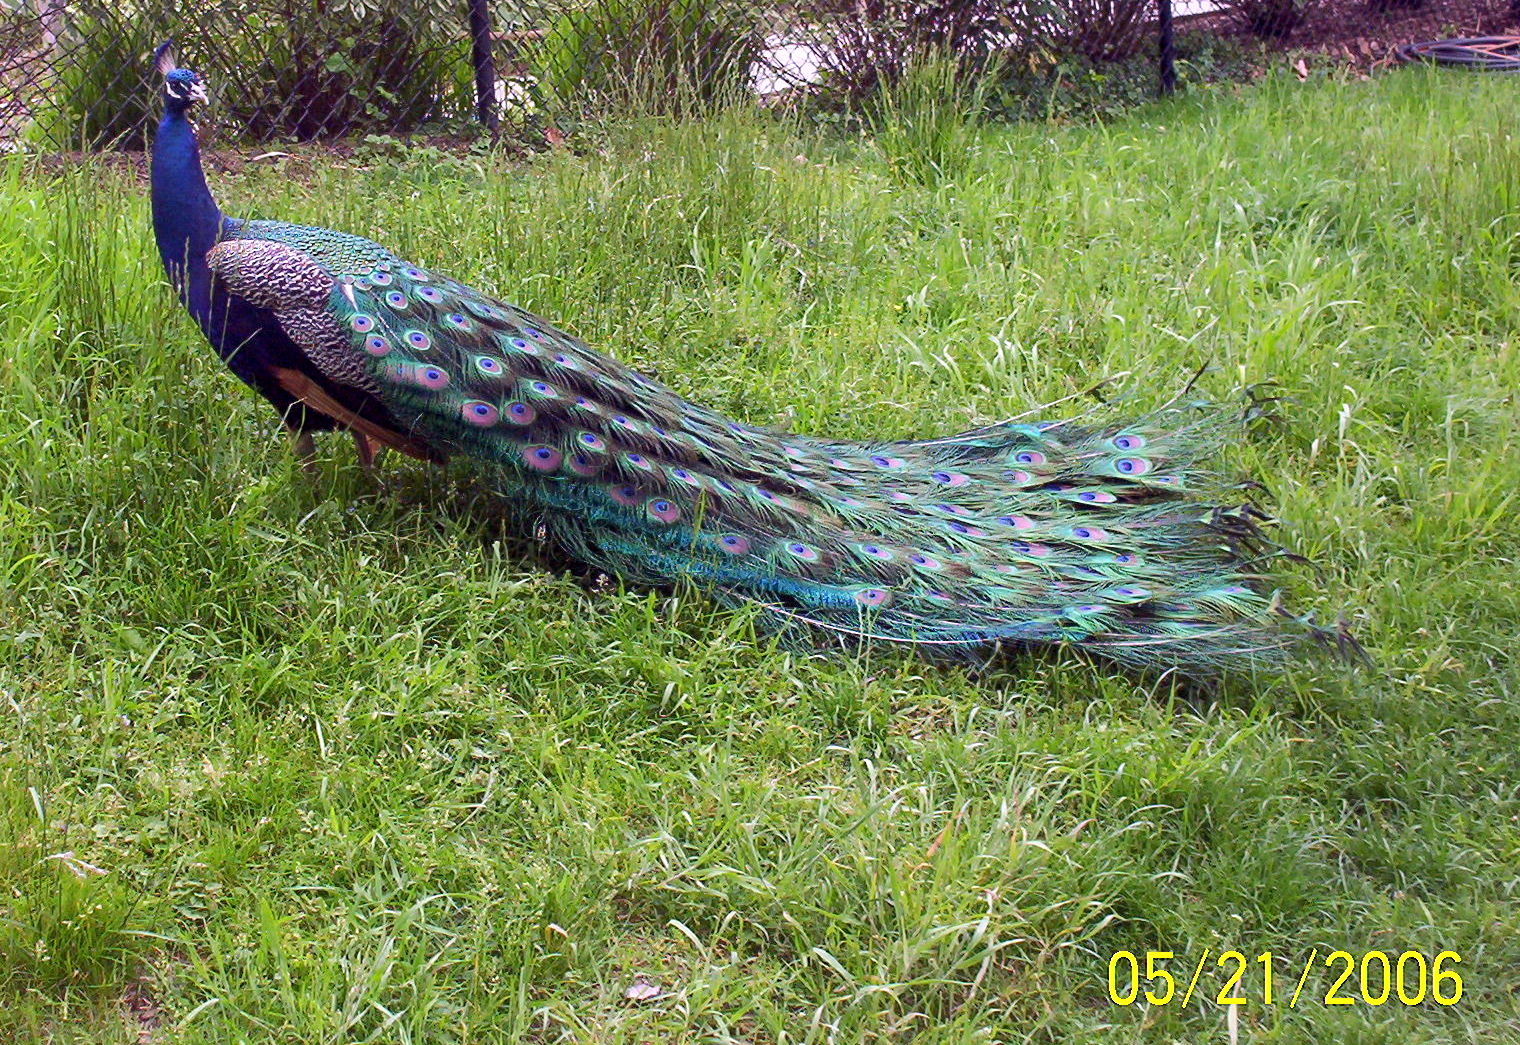 Peacock at Blank Park Zoo 05/21/2006